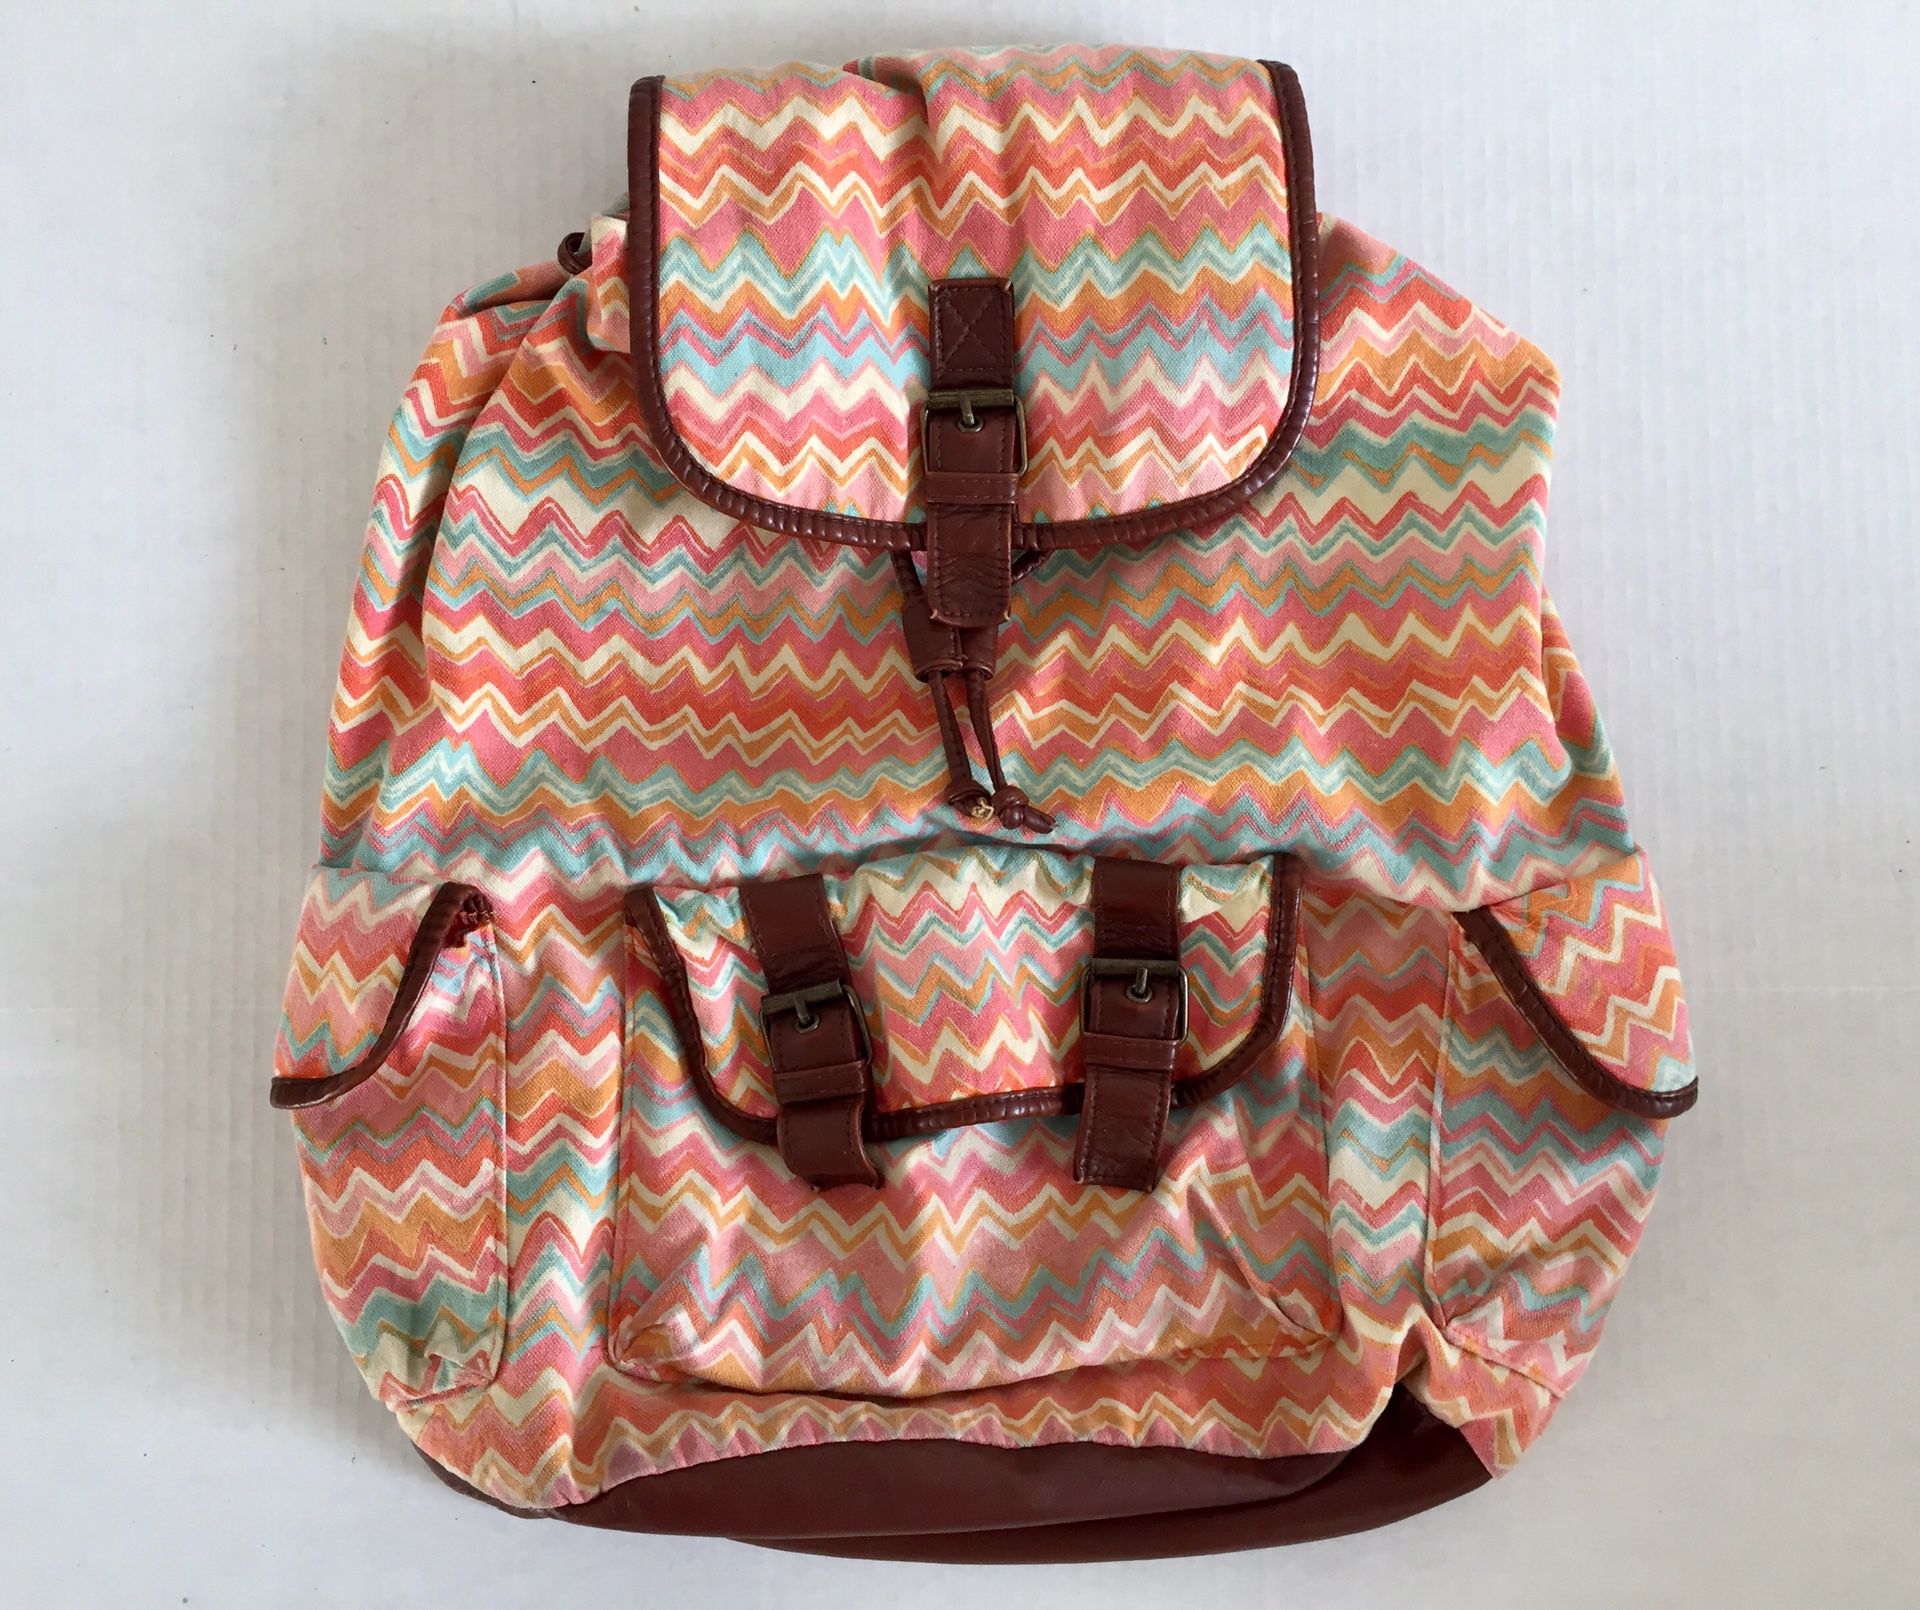 Claire’s Canvas Leather Backpack Classic Retro Pink Orange Teal Bag Purse Handbag